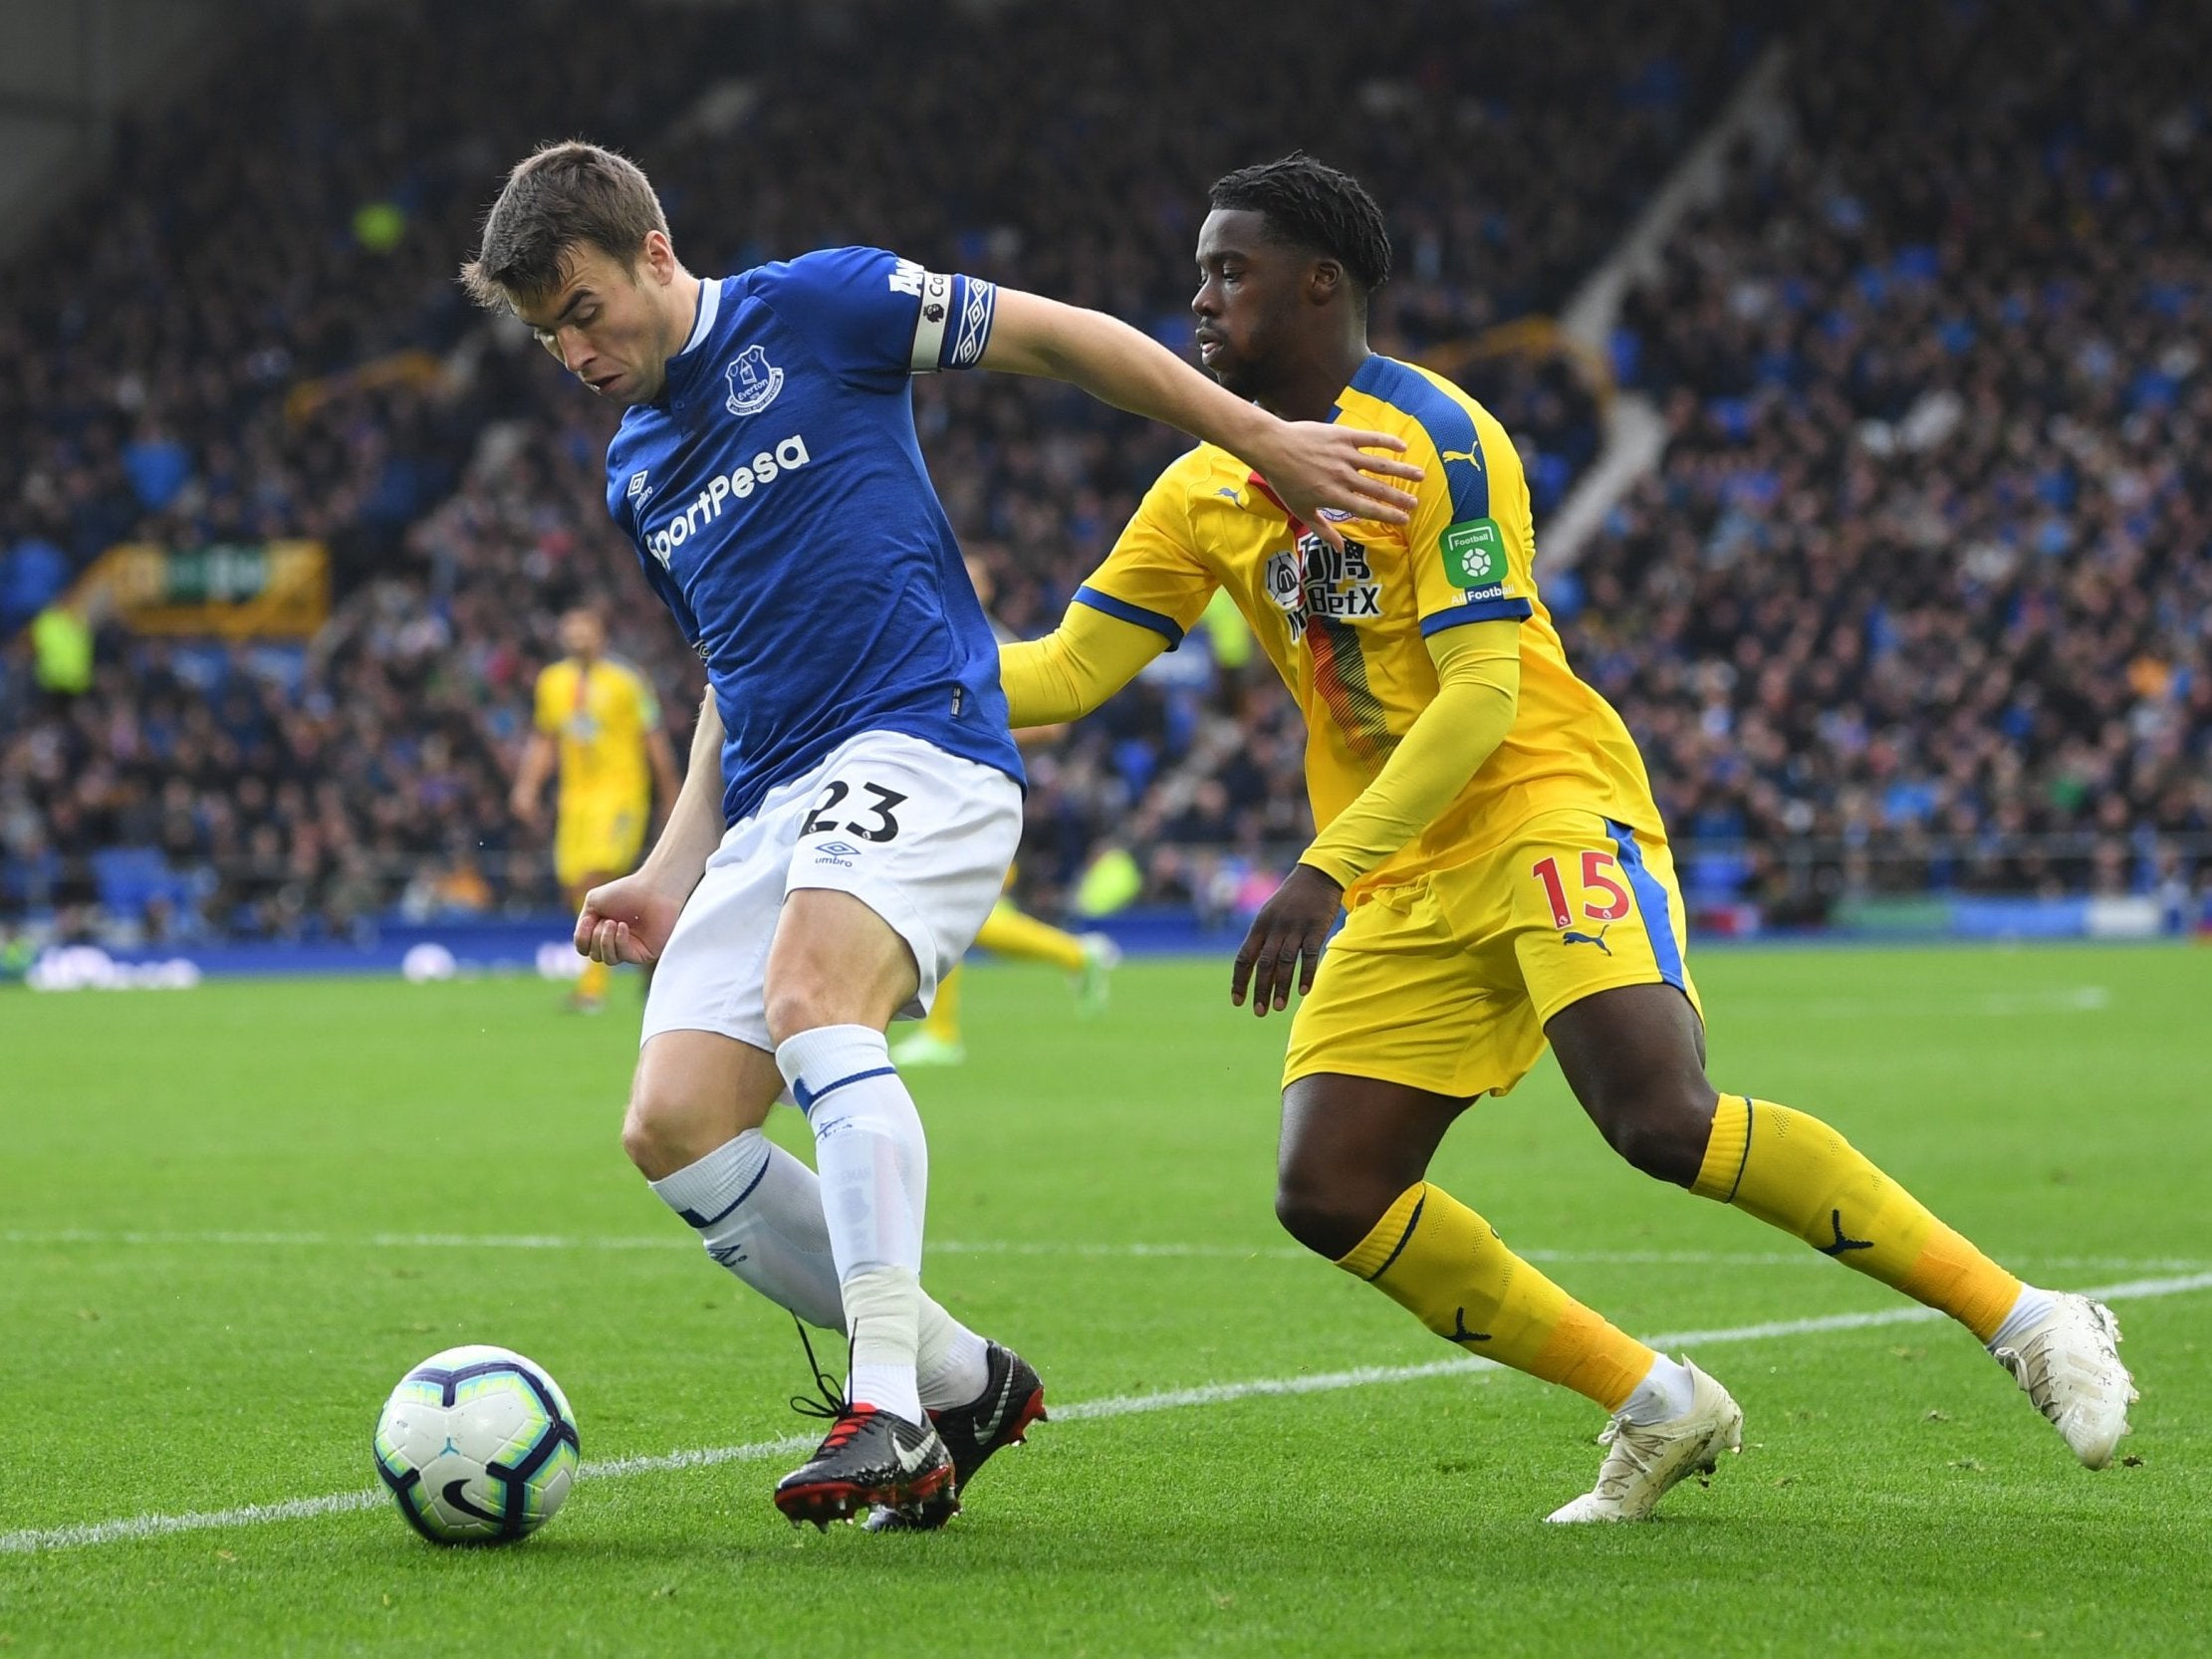 Palace travel to Goodison to play Everton on Sunday